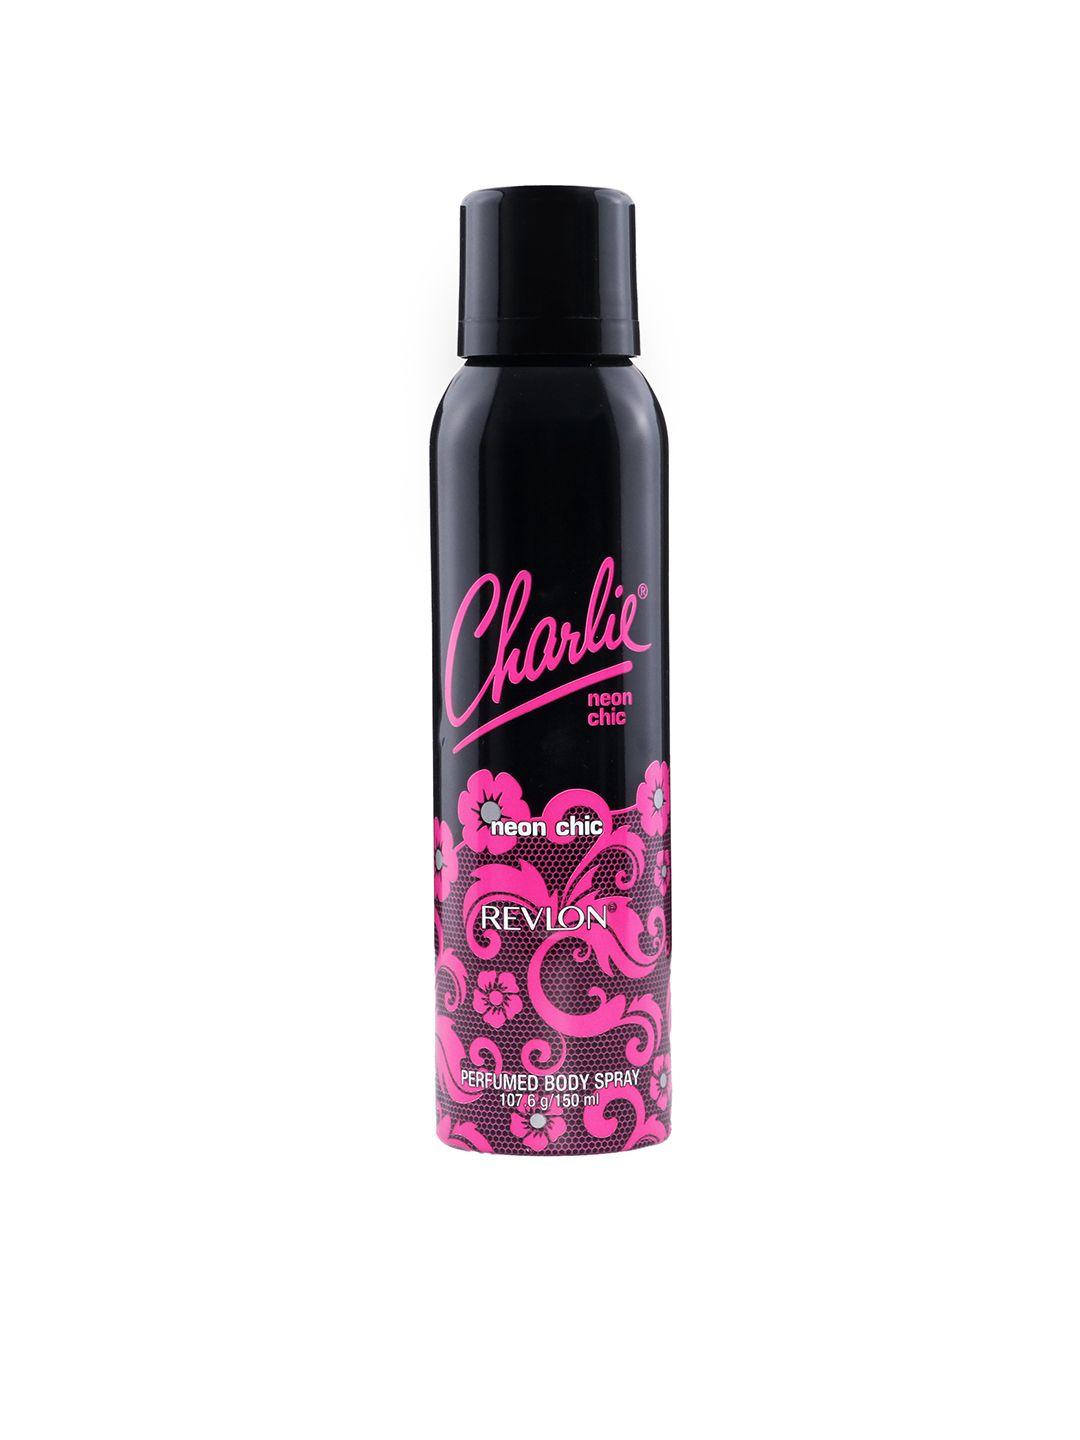 revlon women charlie neon chic perfumed body spray - 150ml